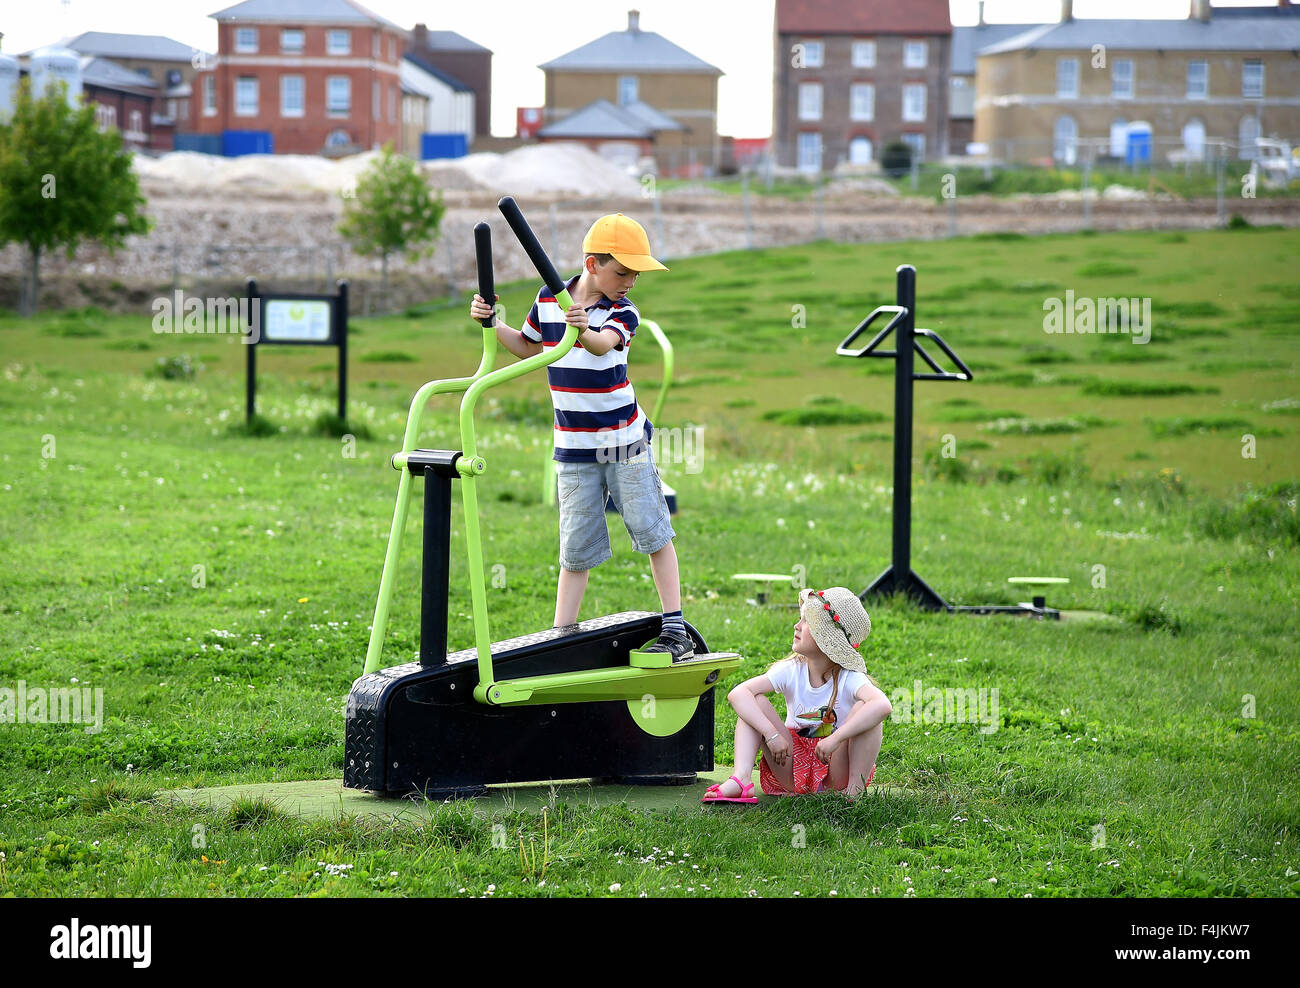 Children play in the Great Field at Poundbury village, Dorset, Britain, UK Stock Photo